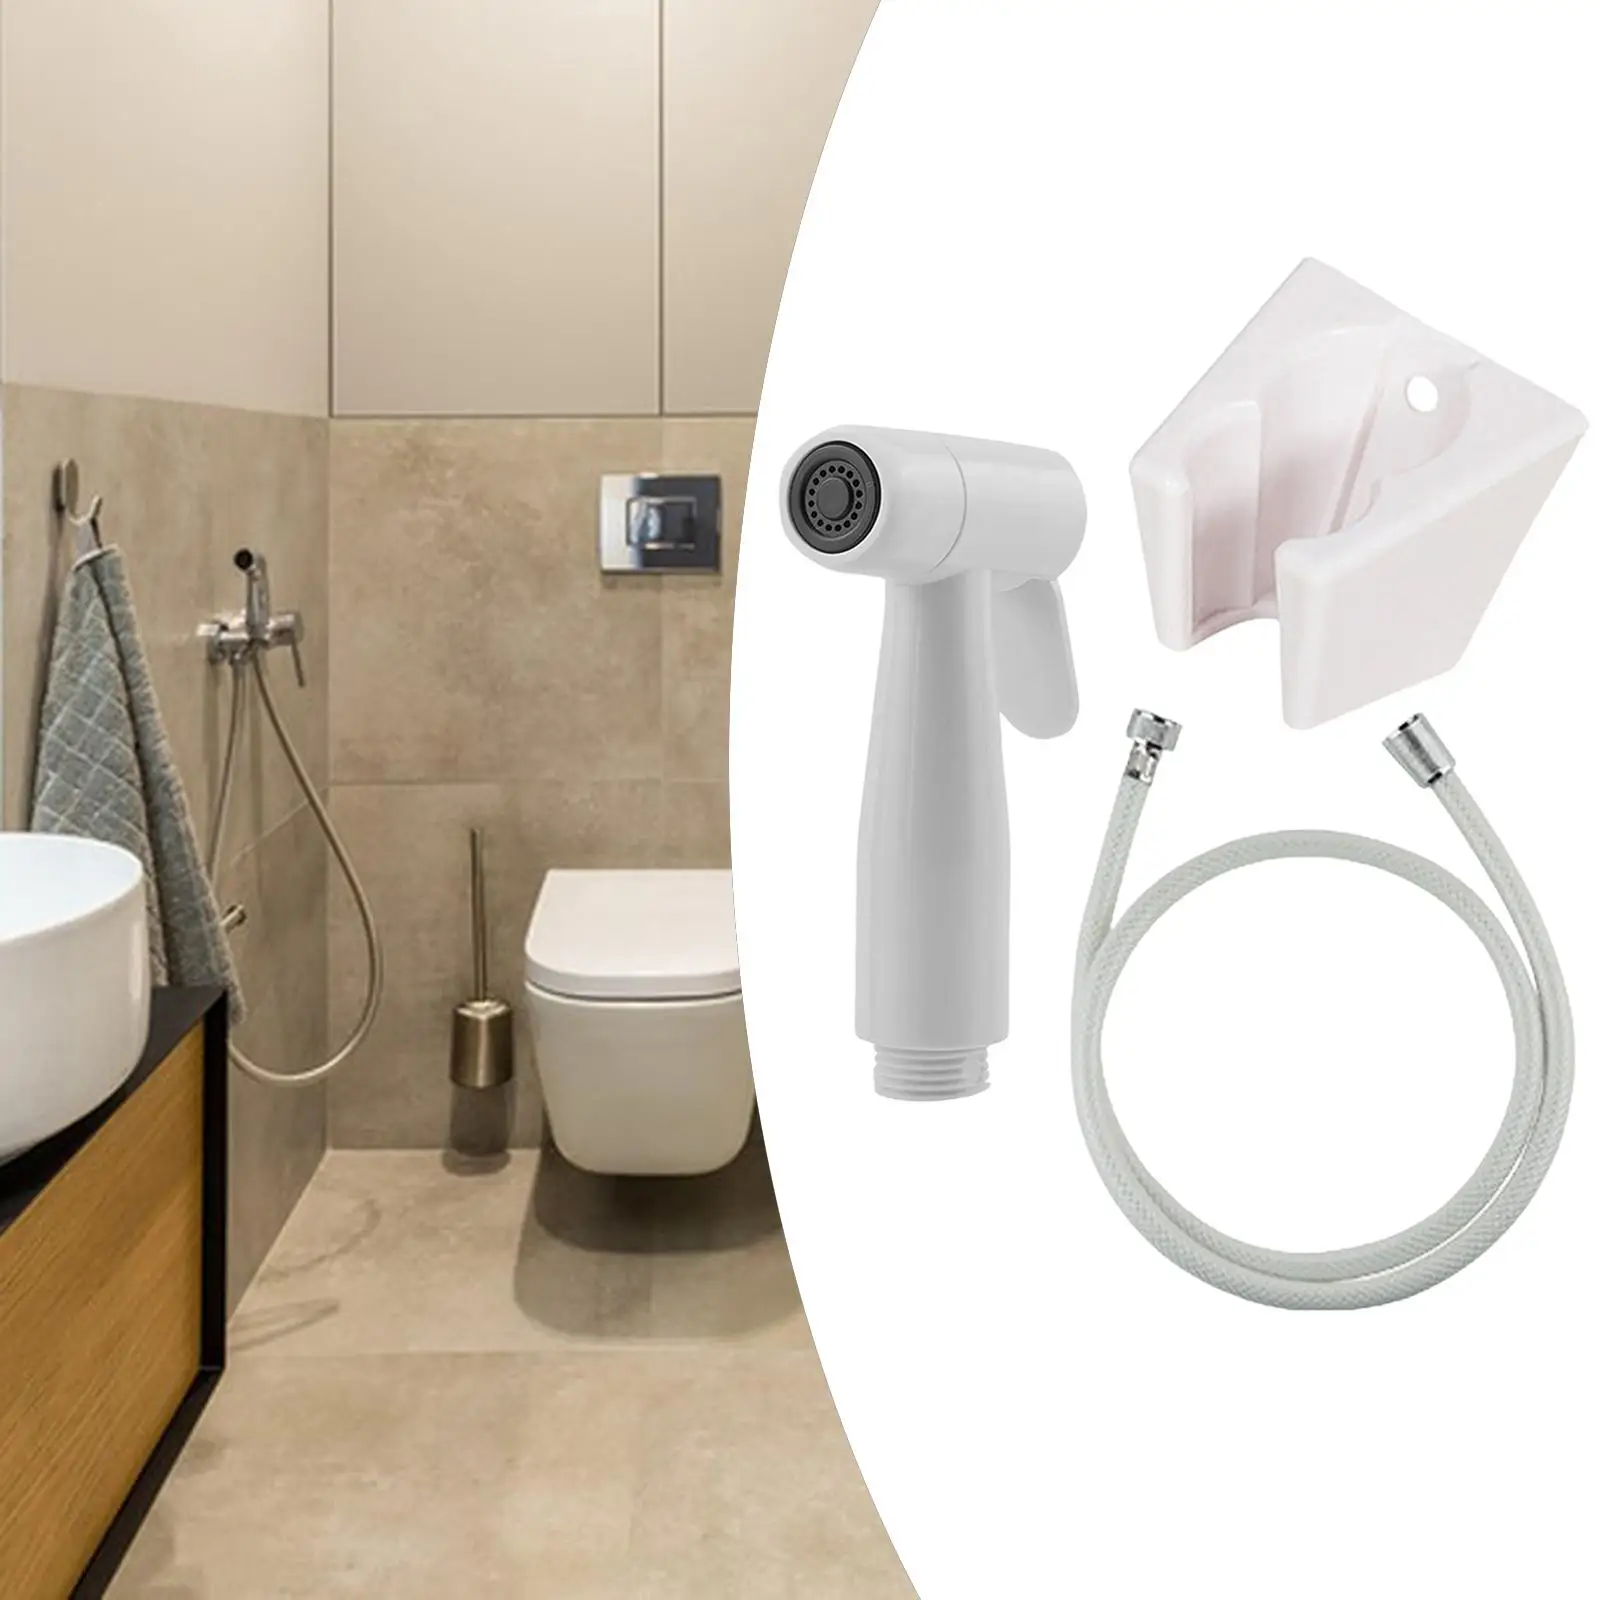 Bidet Toilet Sprayer Set Shower Head with Hose and Wall Bracket Holder for Toilet Flushing Floor Cleaning Kitchen Washroom